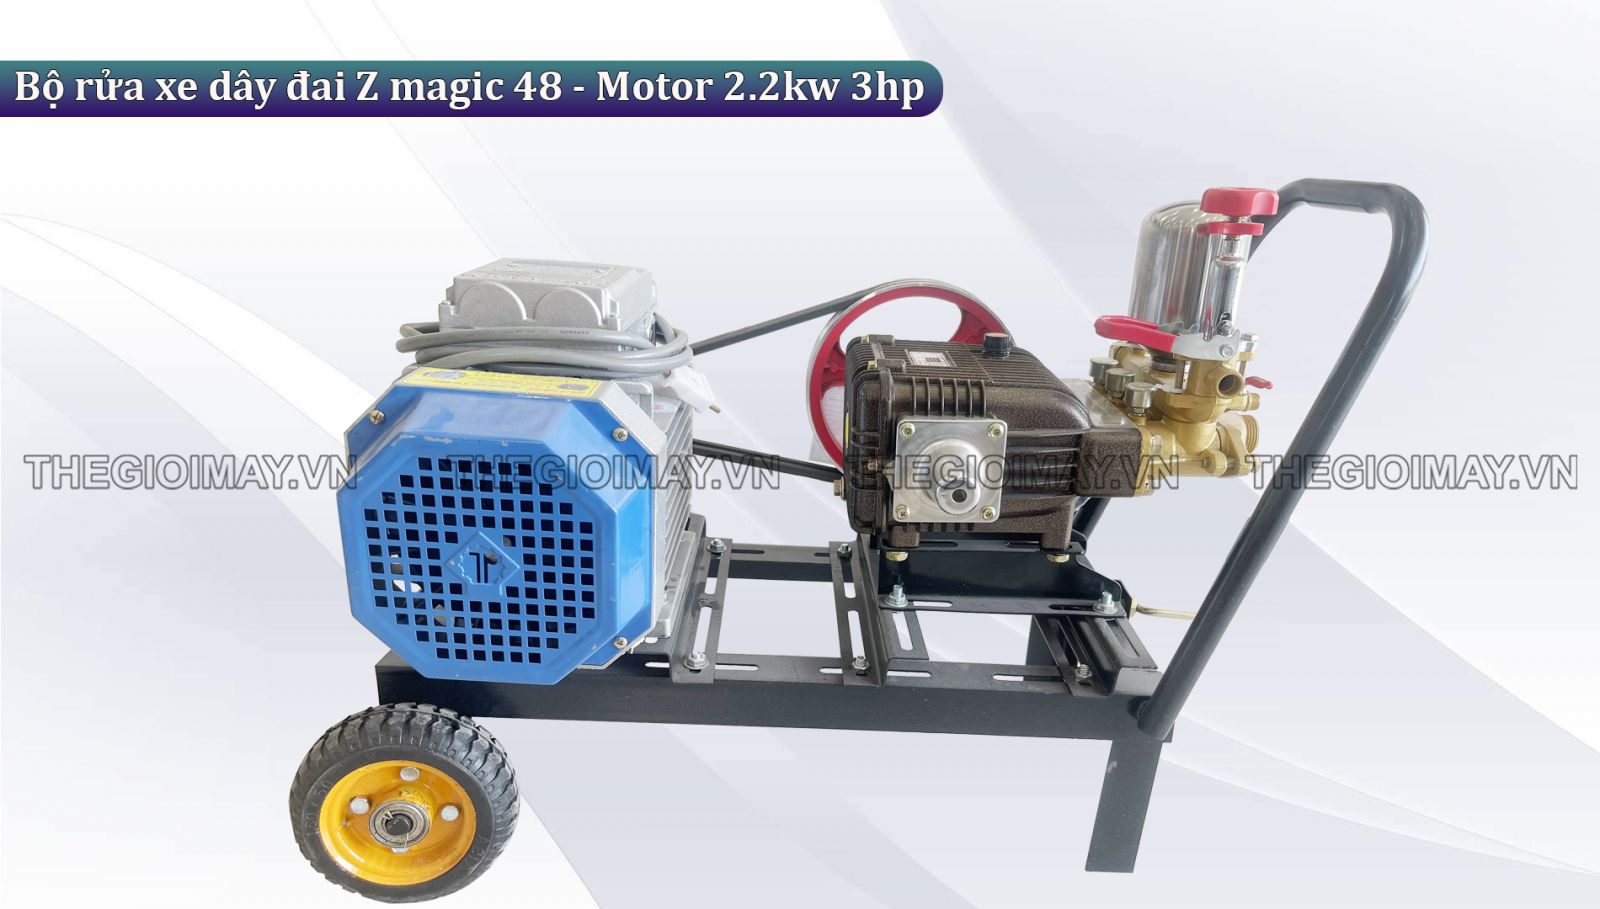 Bộ rửa xe dây đai Z magic 48 - Motor 2.2kw 3hp